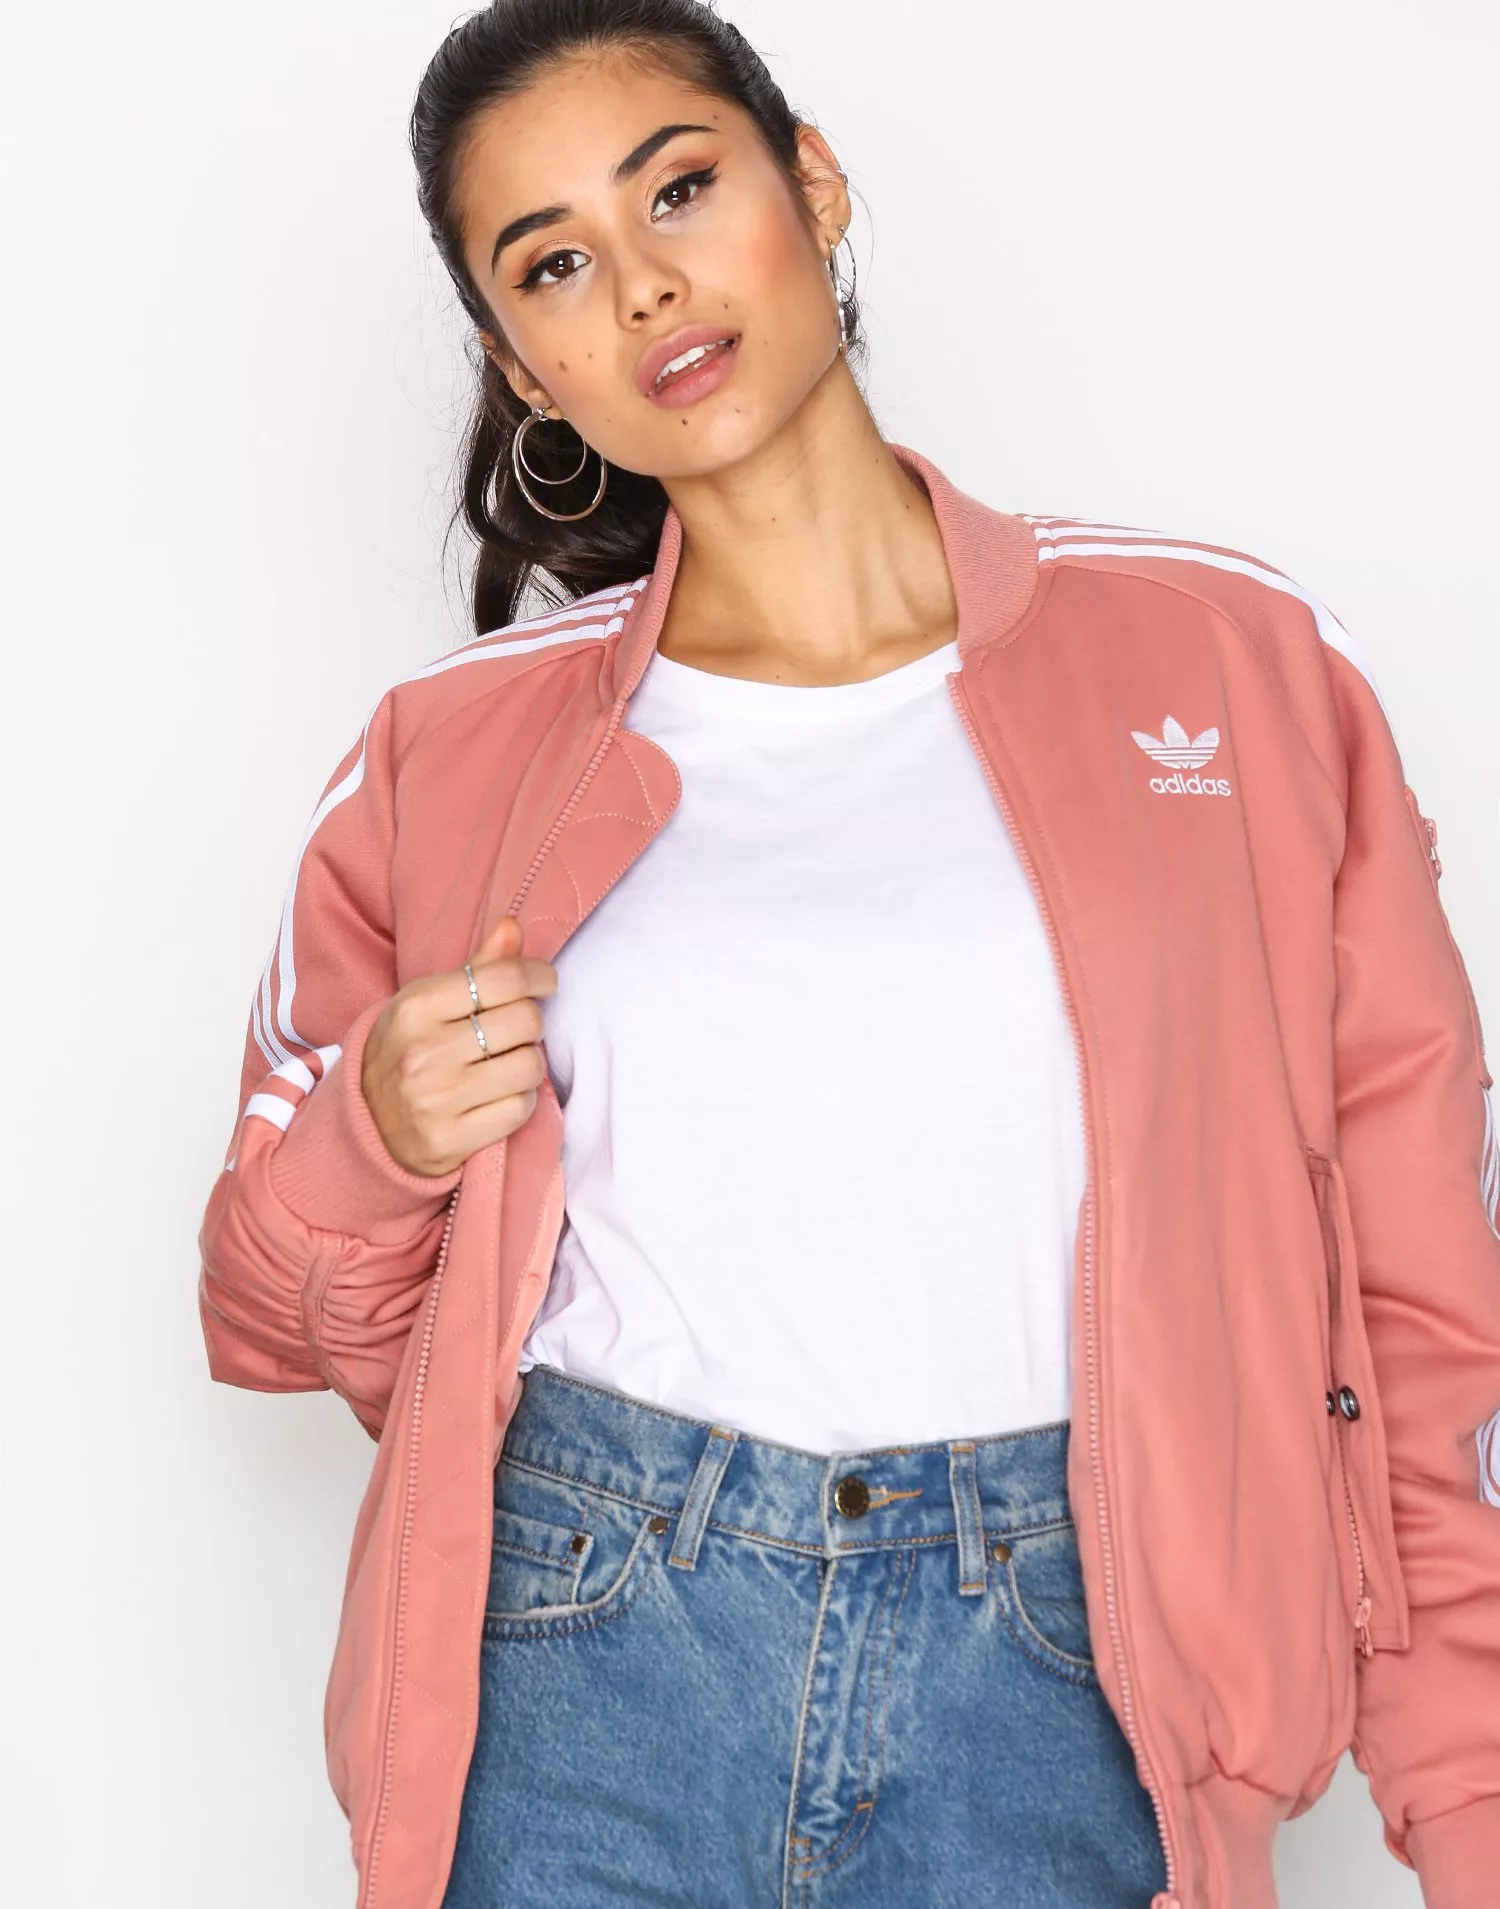 buurman Inspireren lezing Buy Adidas Originals Short Bomber BB - Pink | Nelly.com